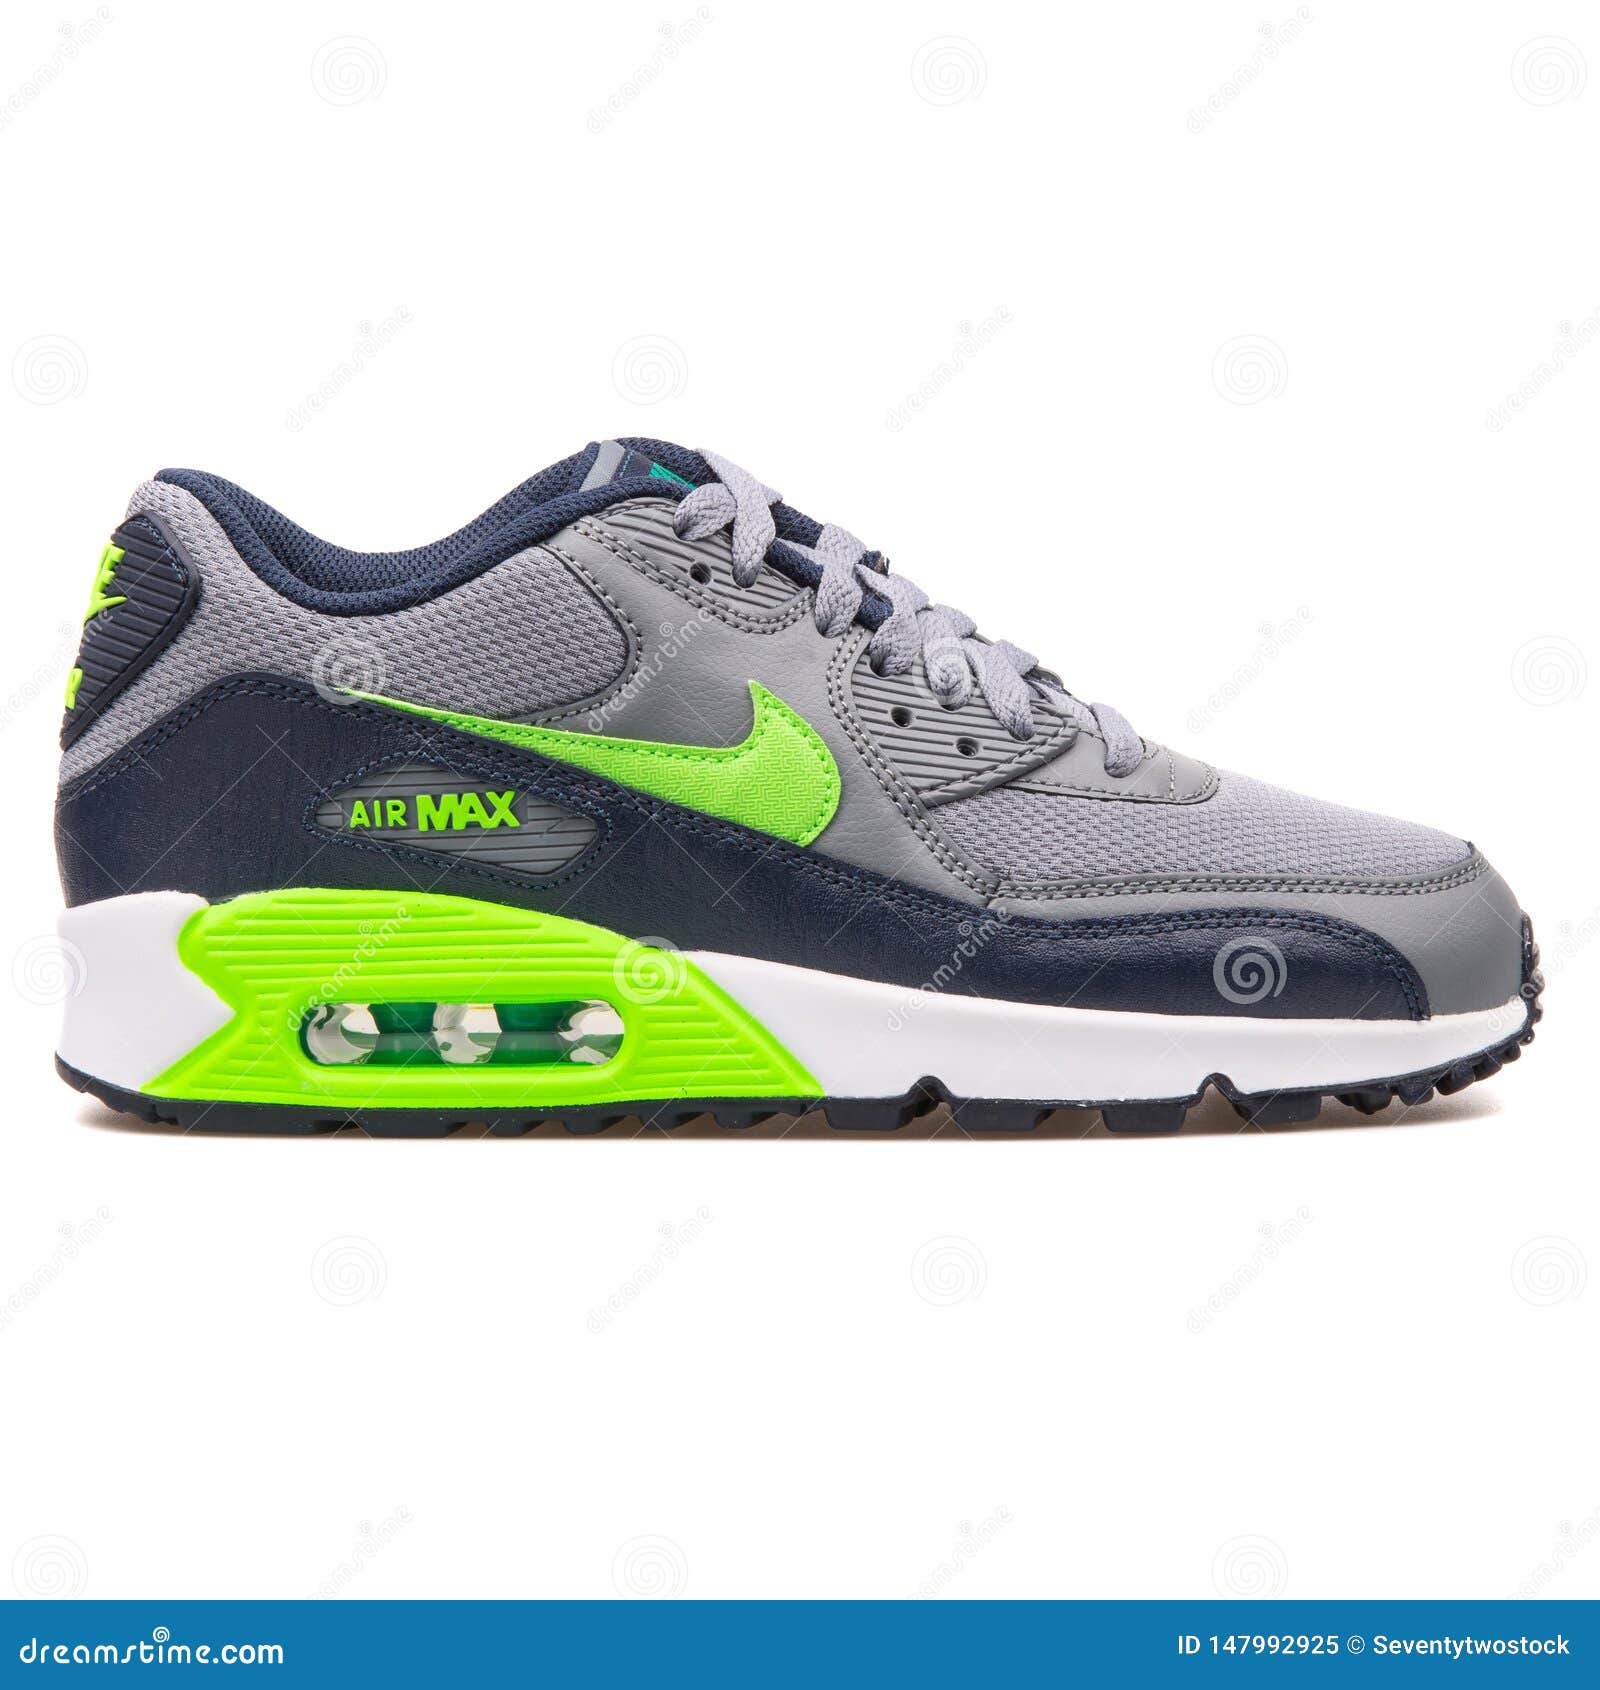 Nike Max 90 Mesh Grey, Obsidian Green Sneaker Editorial Image Image of kicks: 147992925